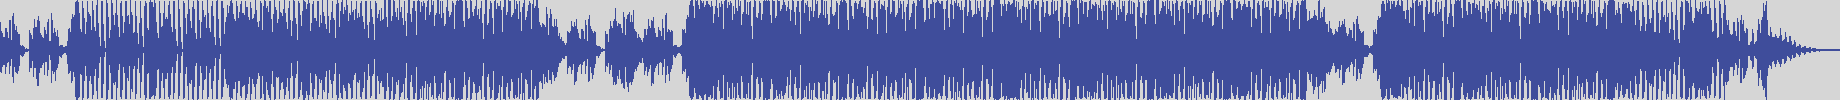 nf_boyz_records [NFY069] Lion Pillar - Deleted Rewind [Jeff Darko Mix] audio wave form